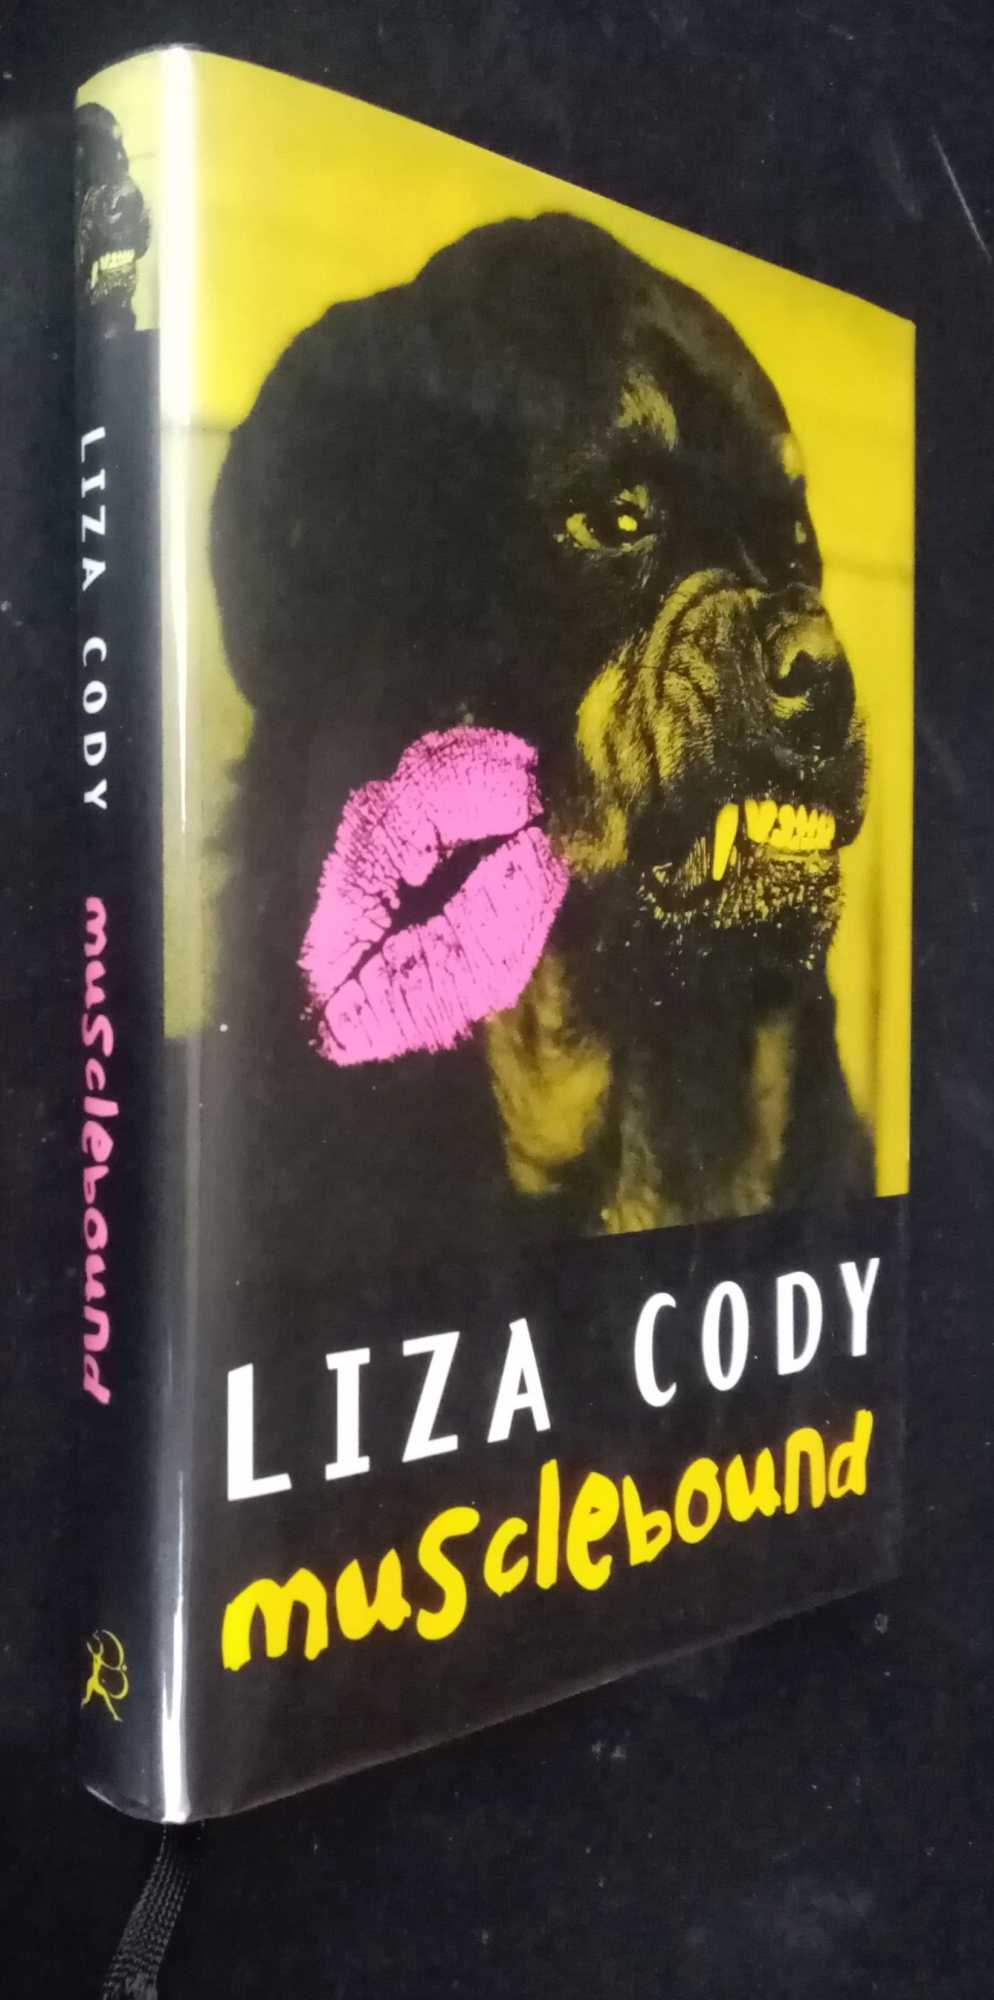 Liza Cody - Musclebound      SIGNED